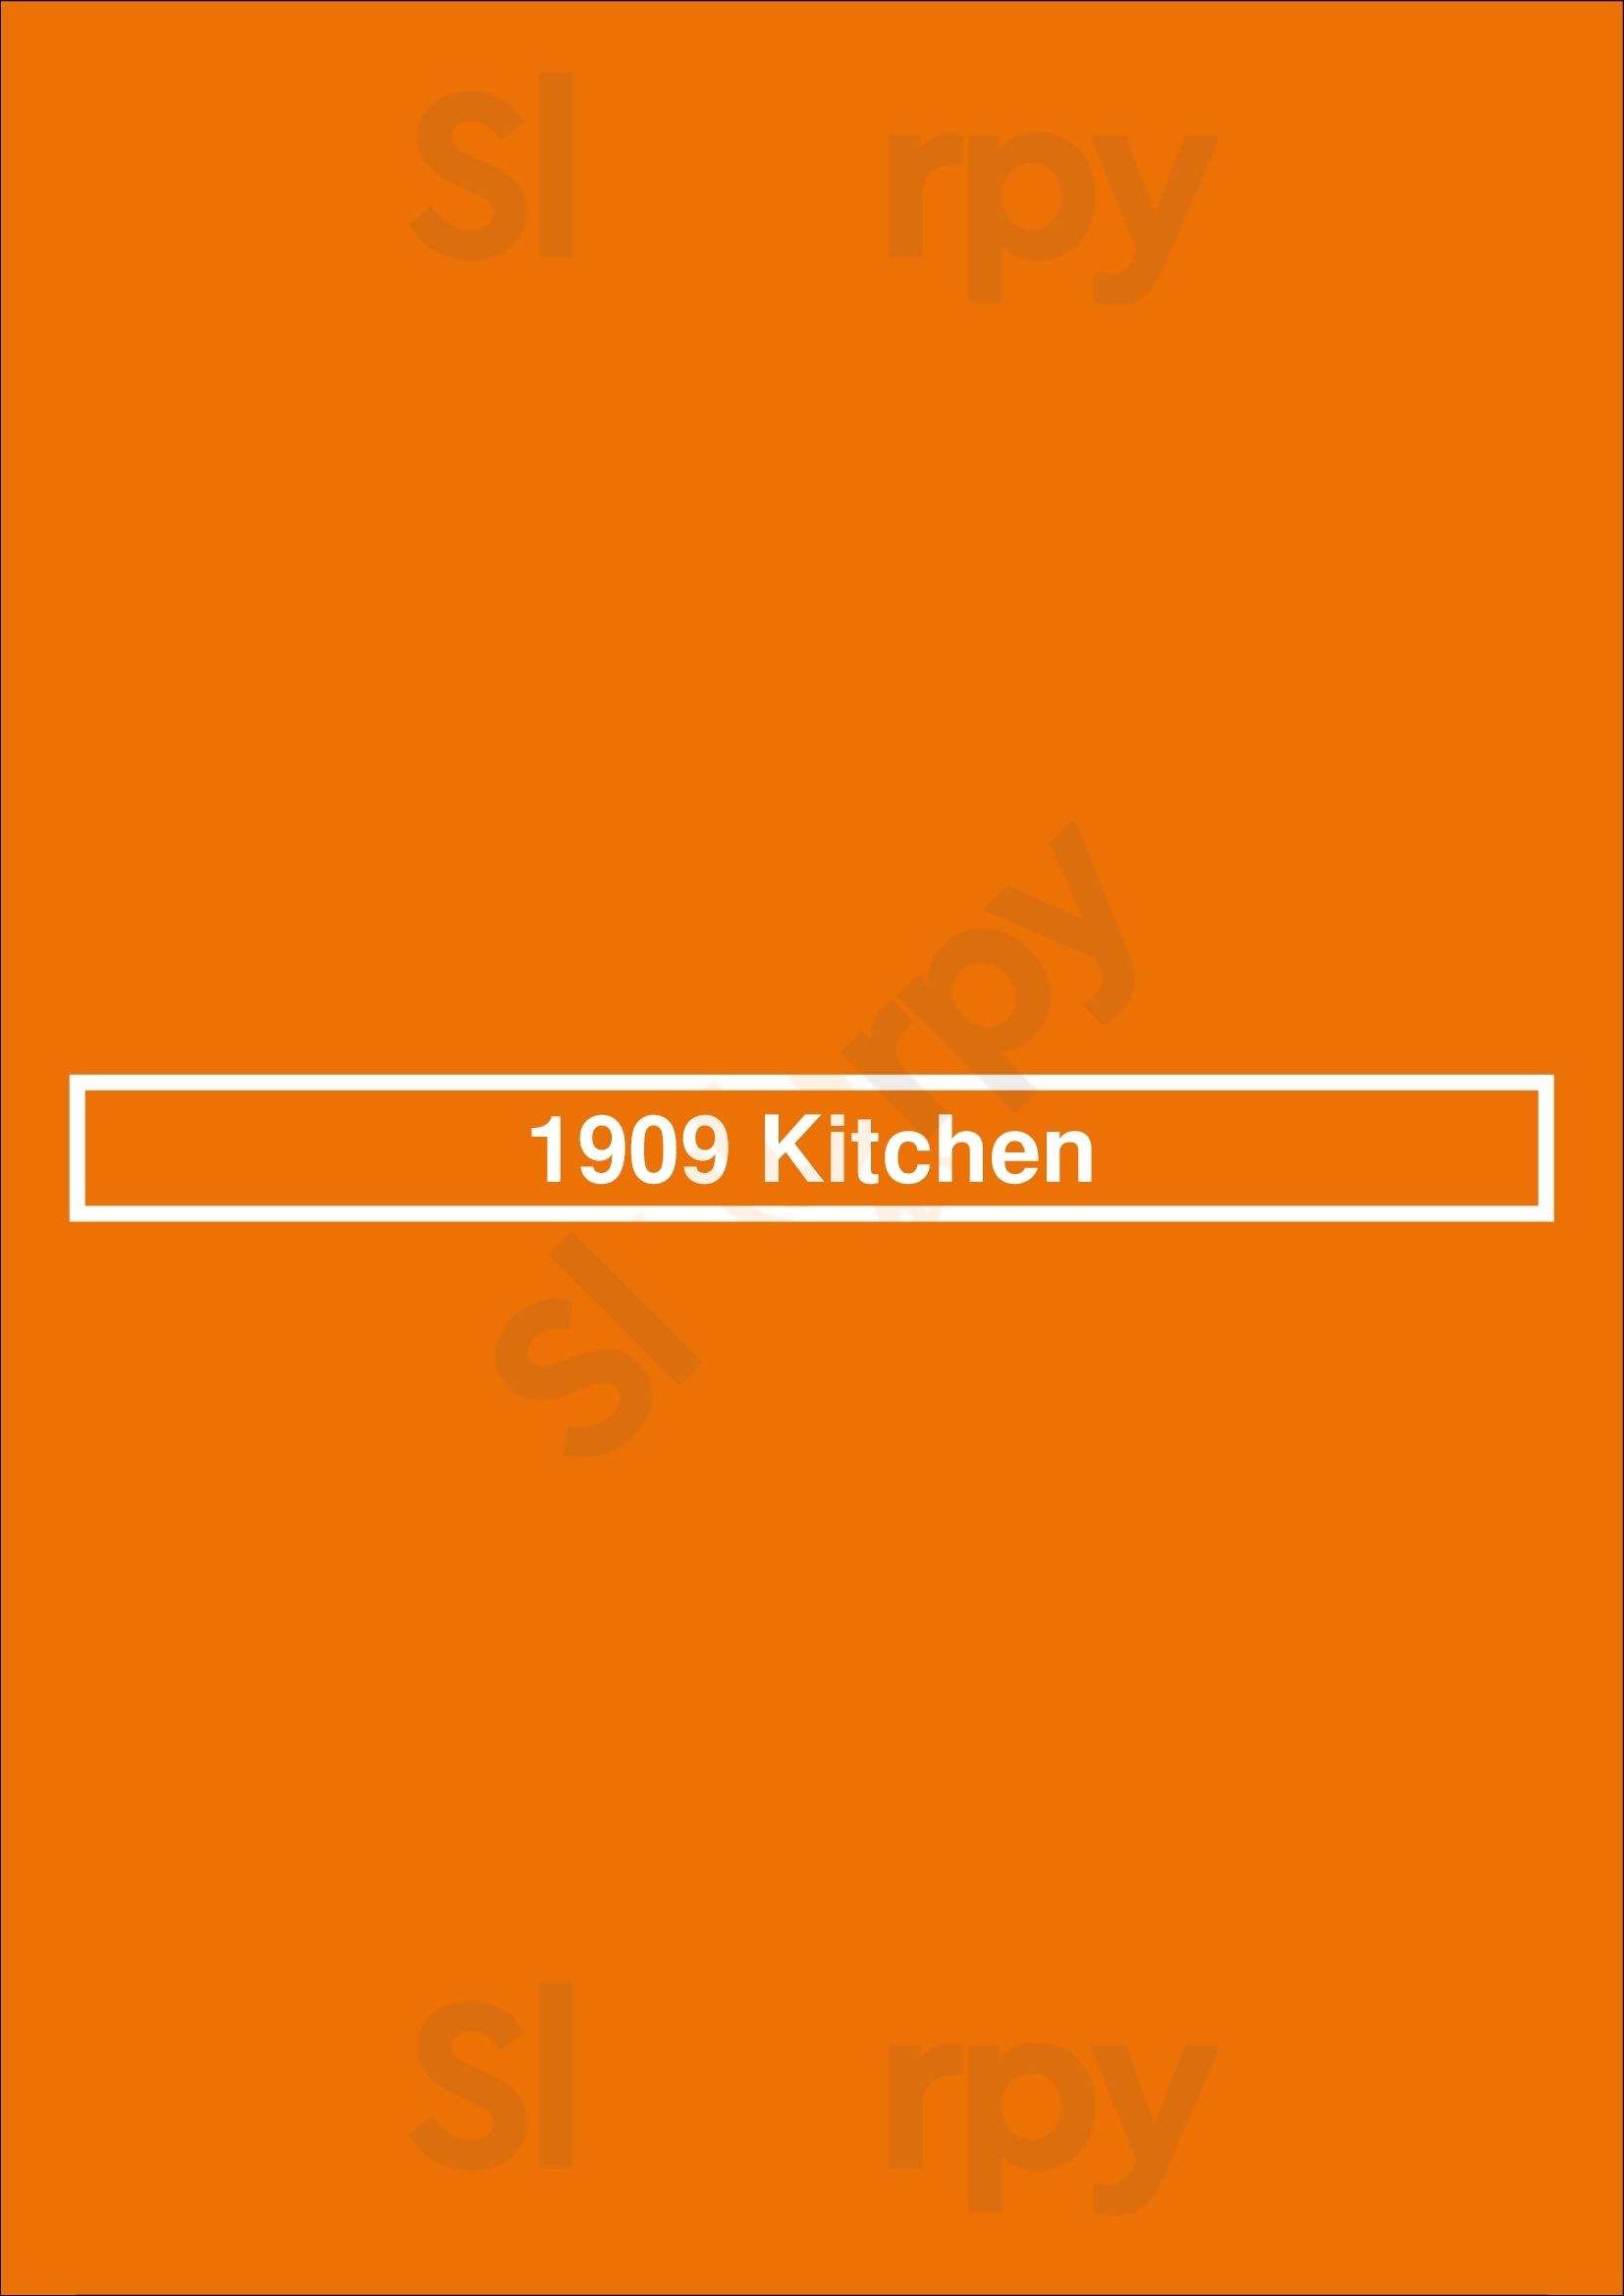 1909 Kitchen Vancouver Island Menu - 1